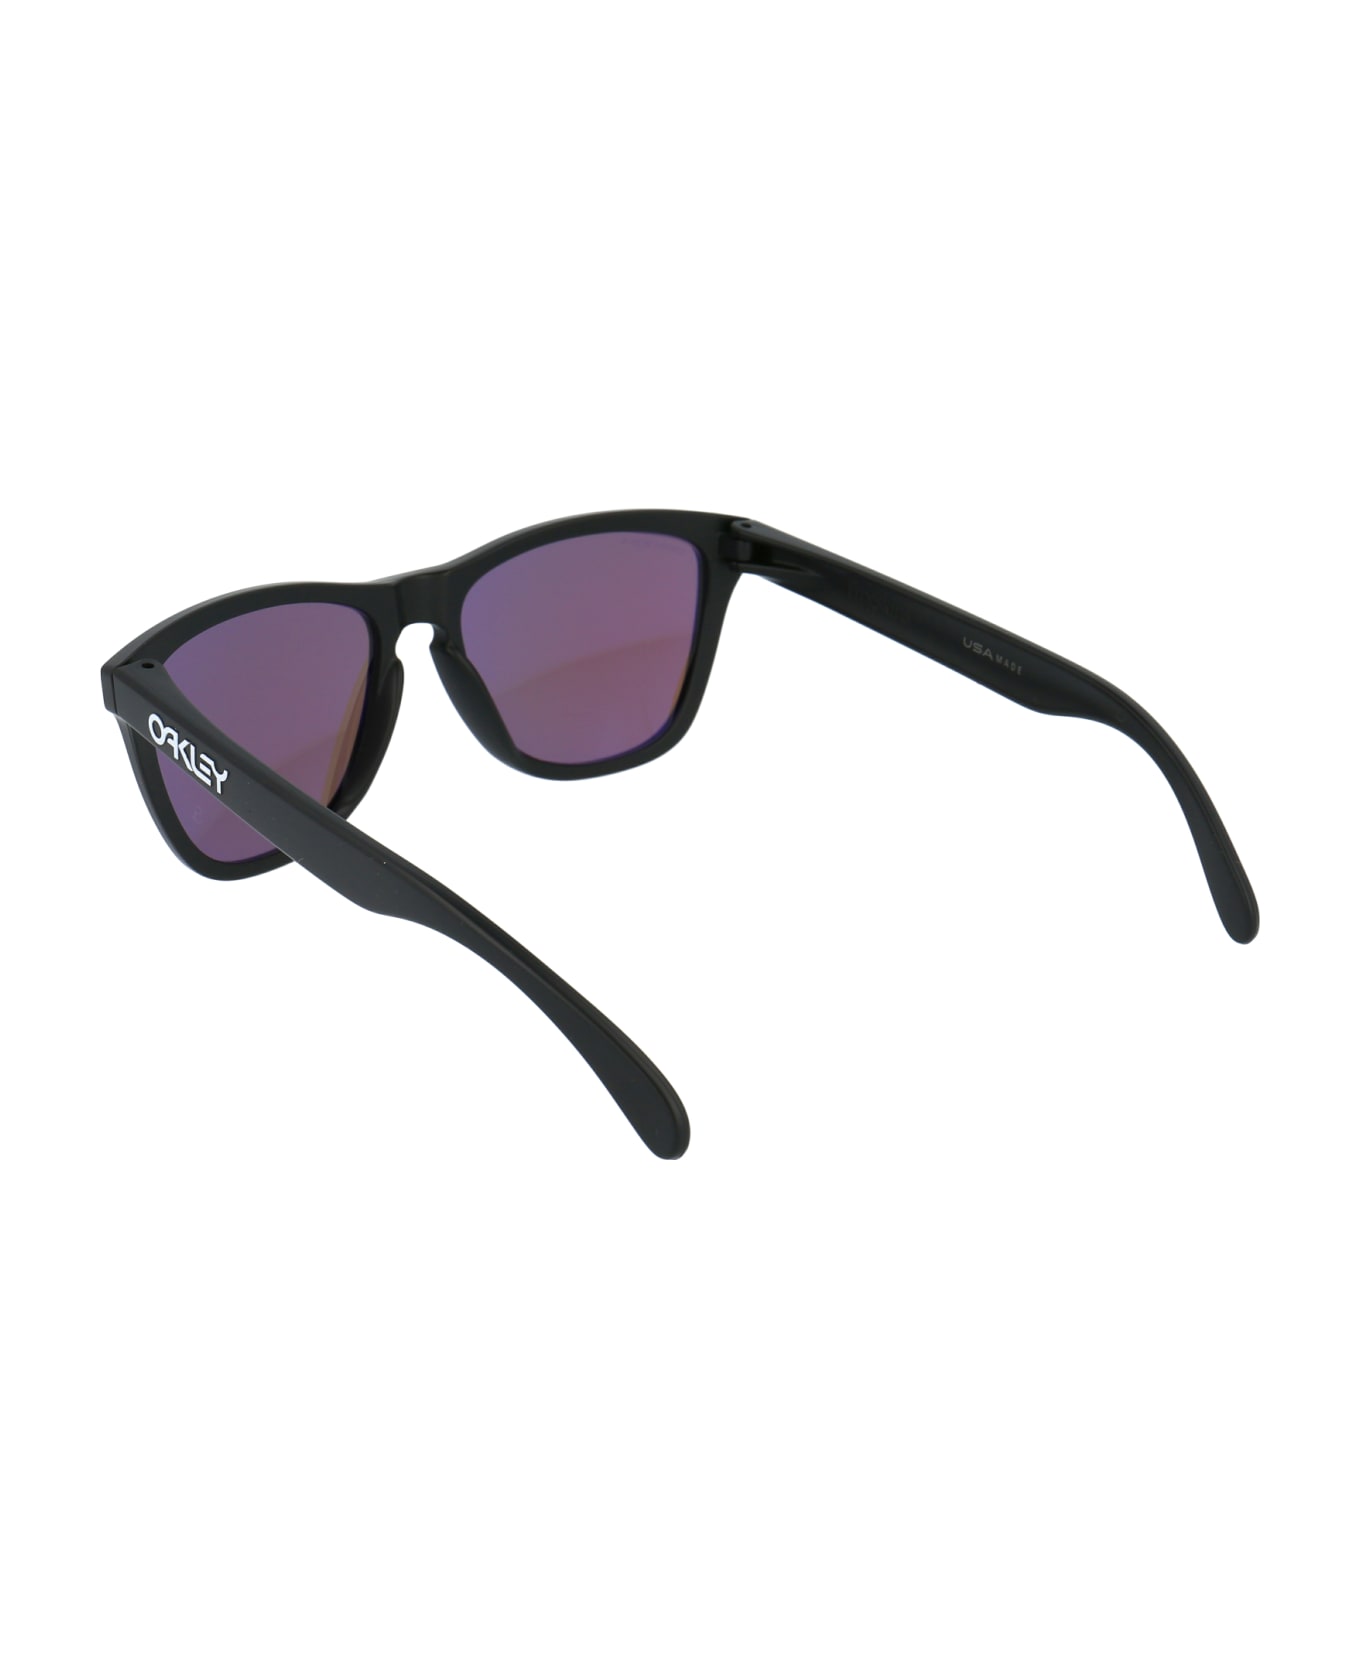 Oakley Frogskins Sunglasses - 9013H6 MATTE BLACK